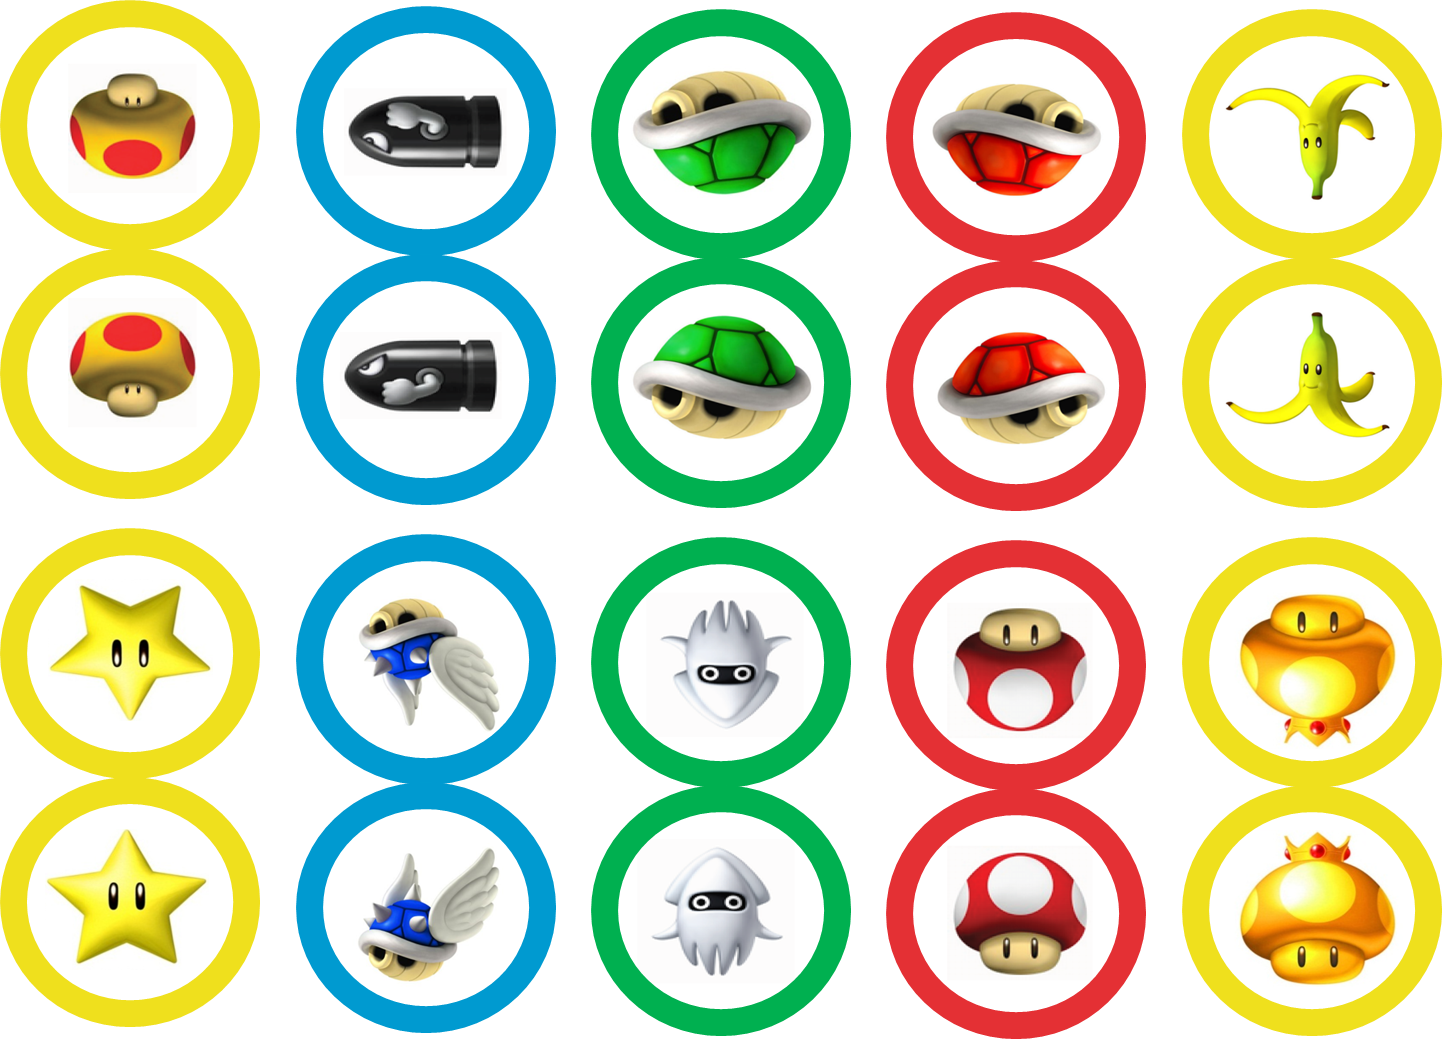 Mario Kart Cupcake Toppers - Mario Kart Blue Shell (1442x1039)